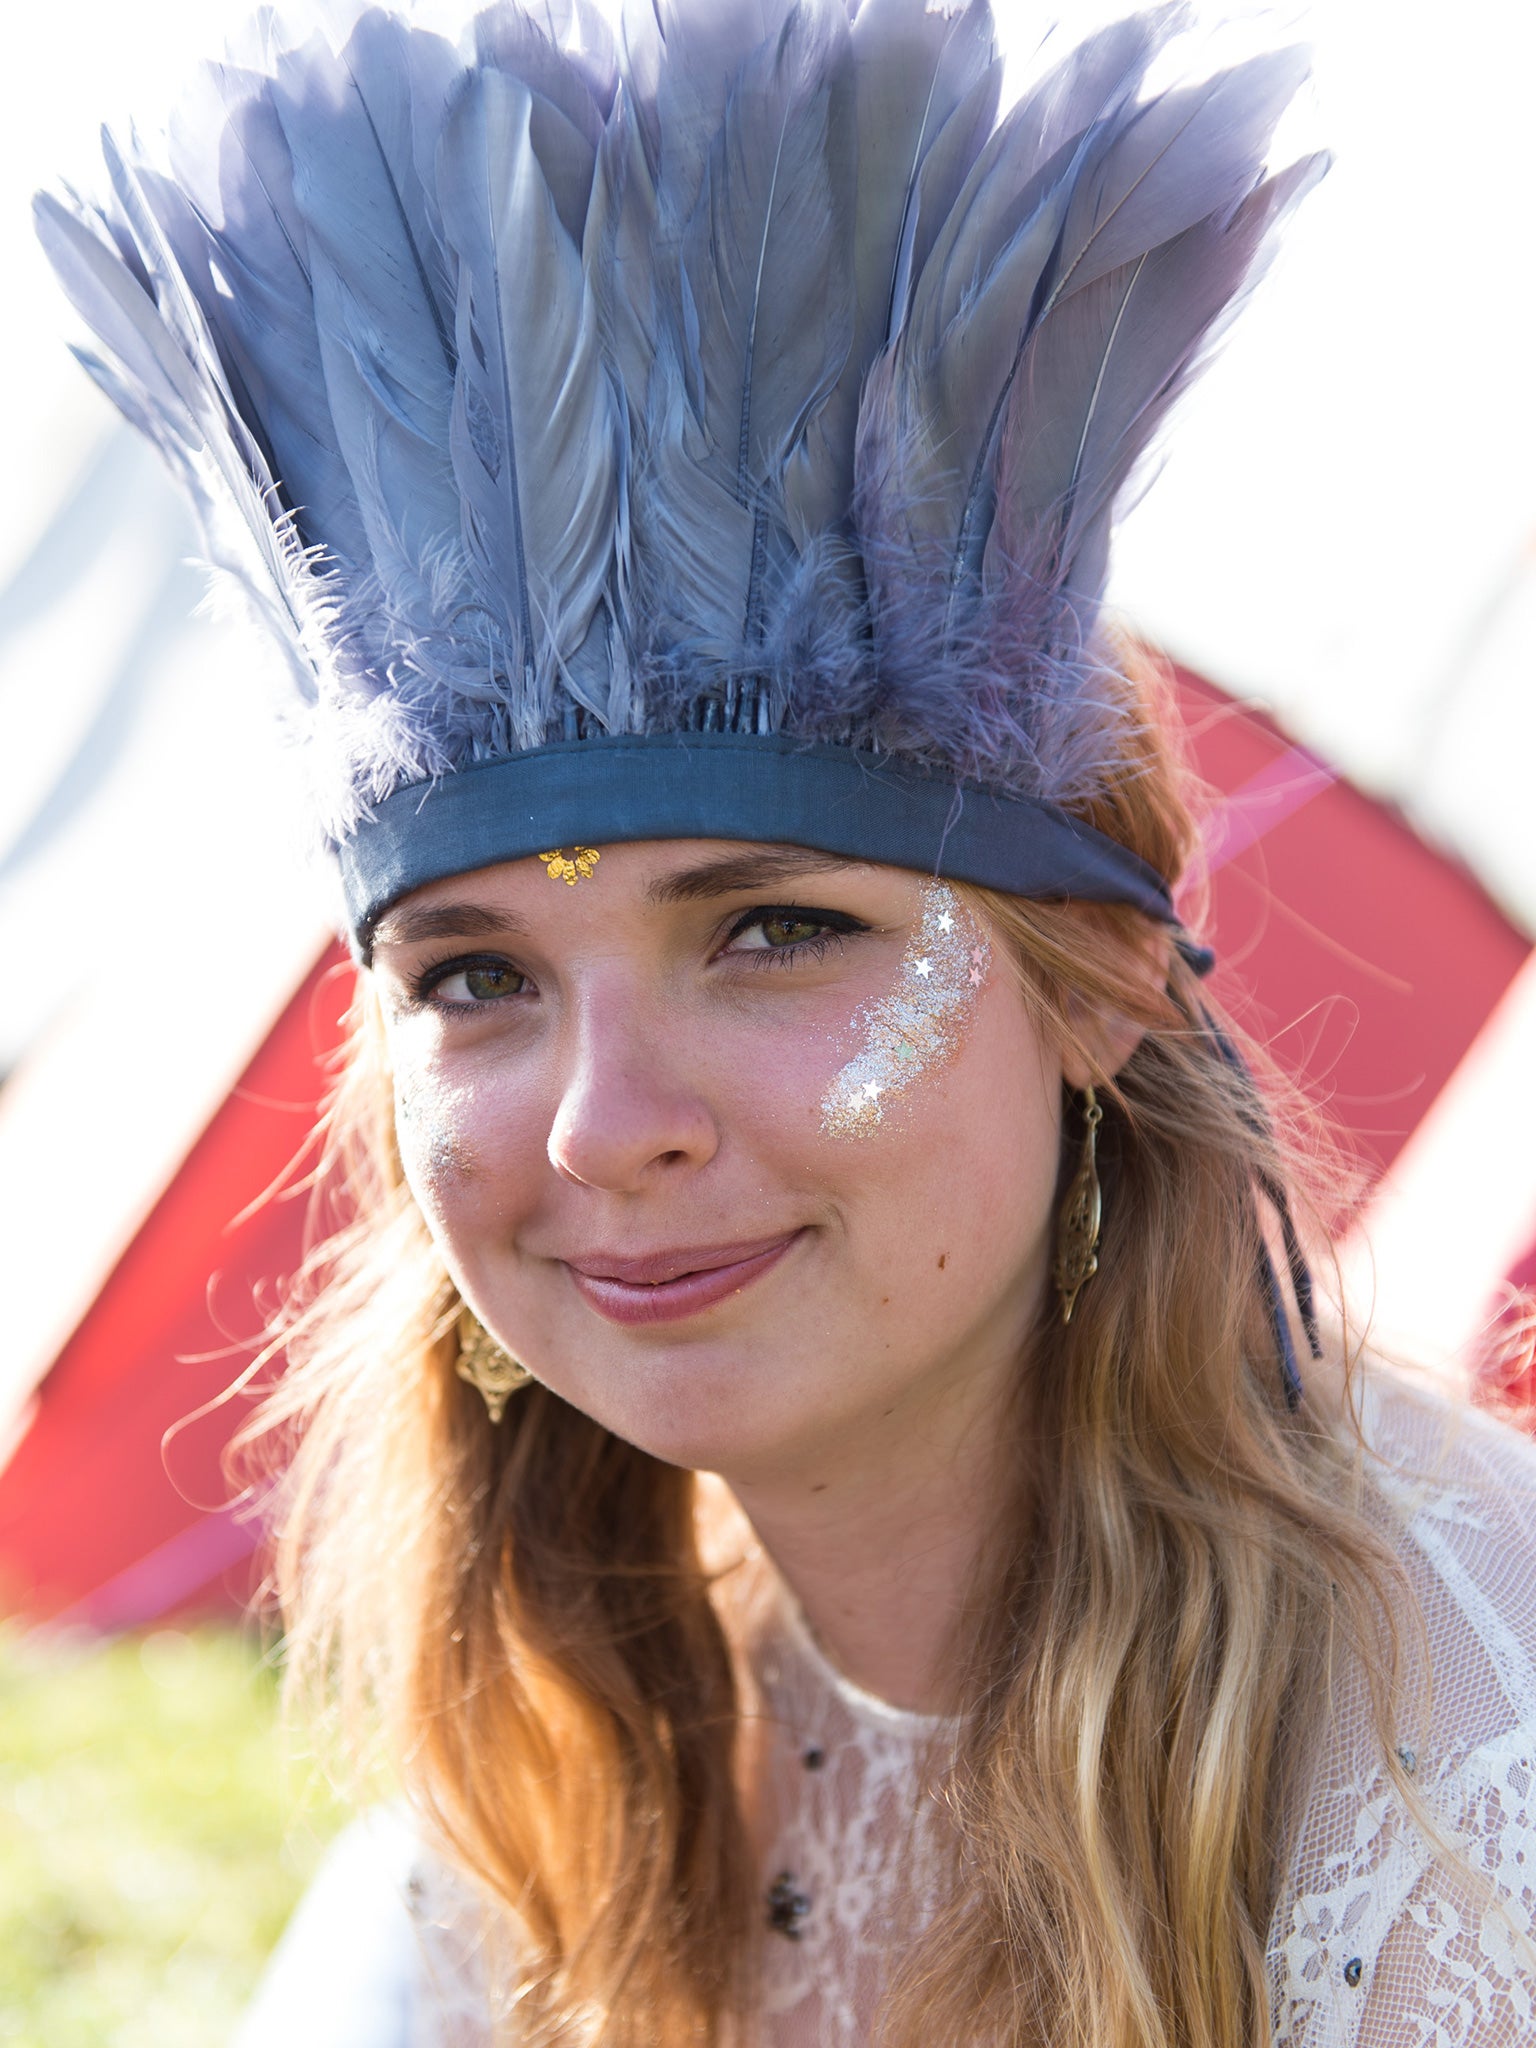 A festival-goer sports a feathered headdress at Glastonbury